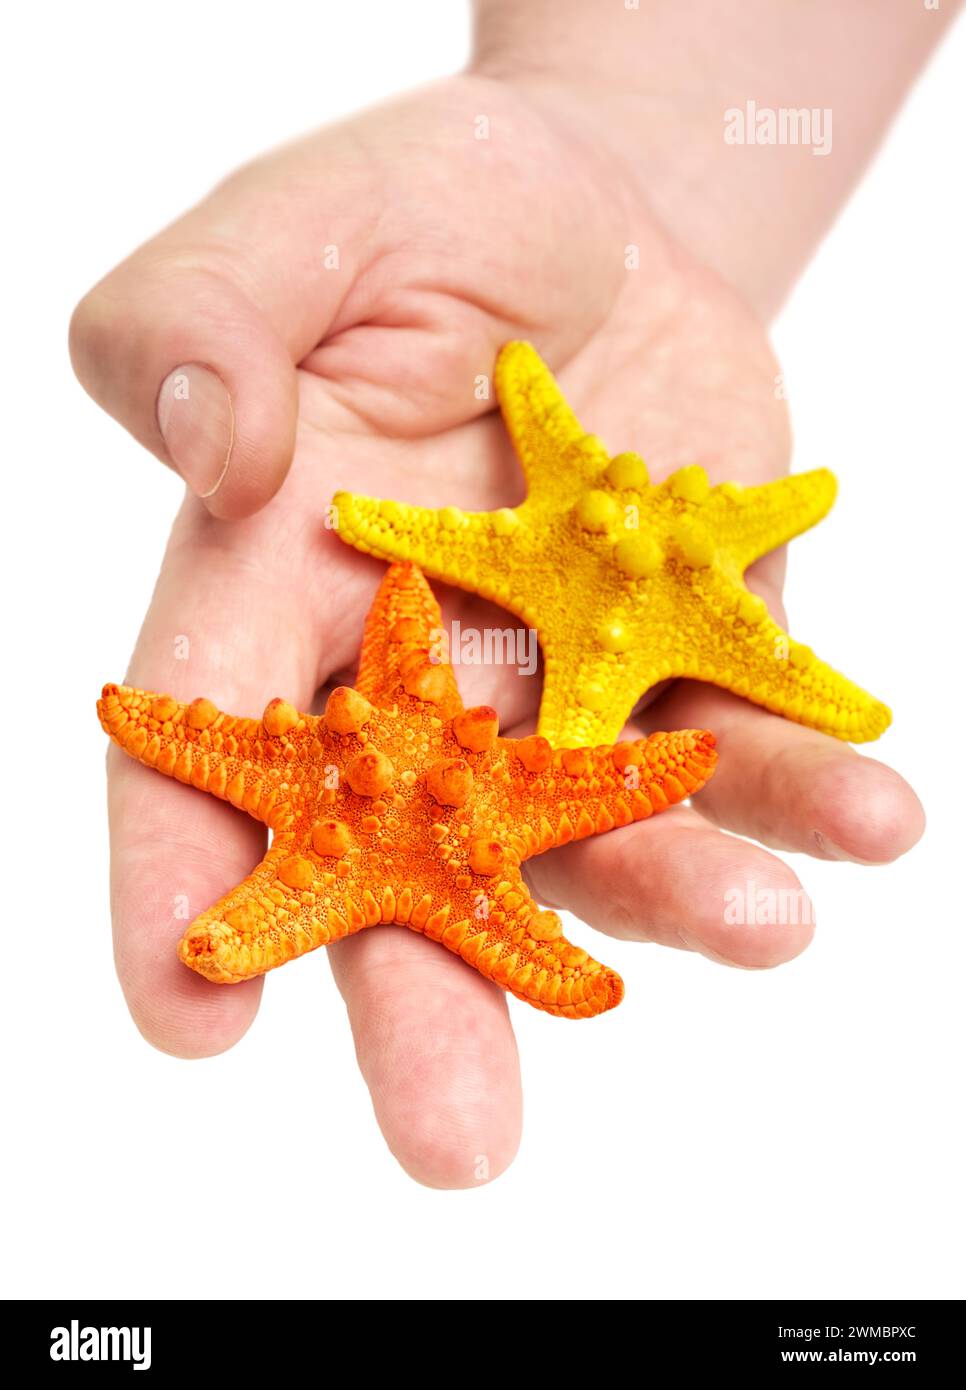 Hand holding two starfish, yellow and orange, close-up shot, isolated on white background Stock Photo